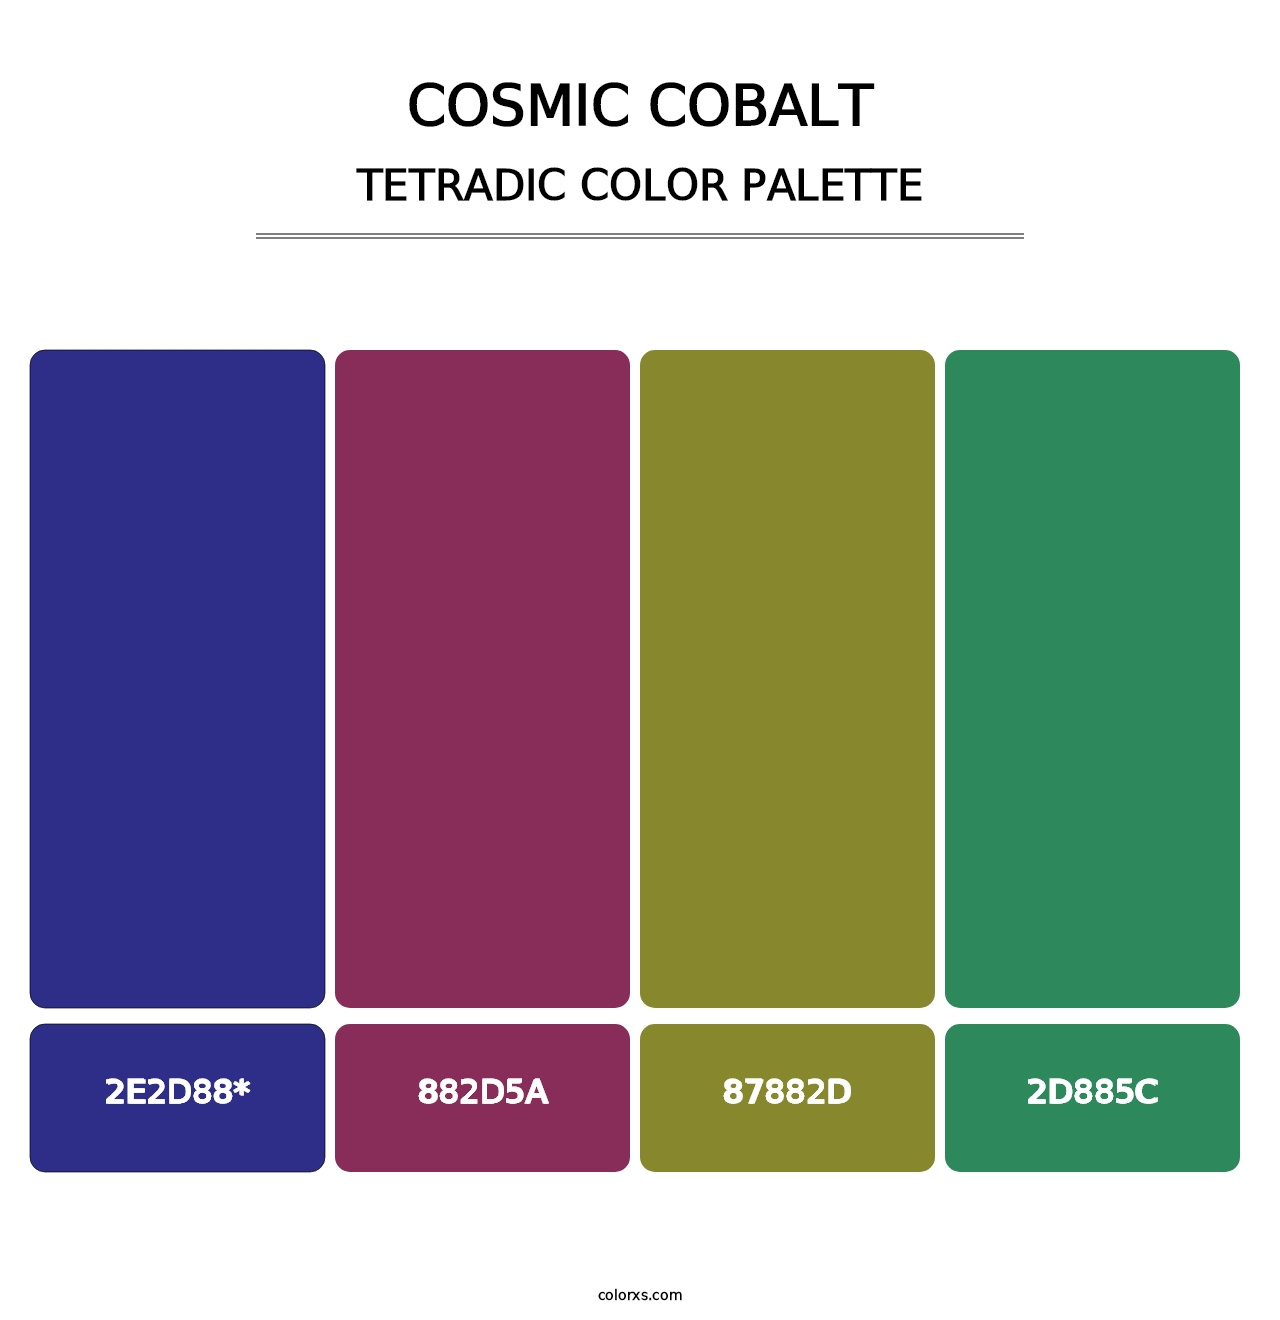 Cosmic Cobalt - Tetradic Color Palette